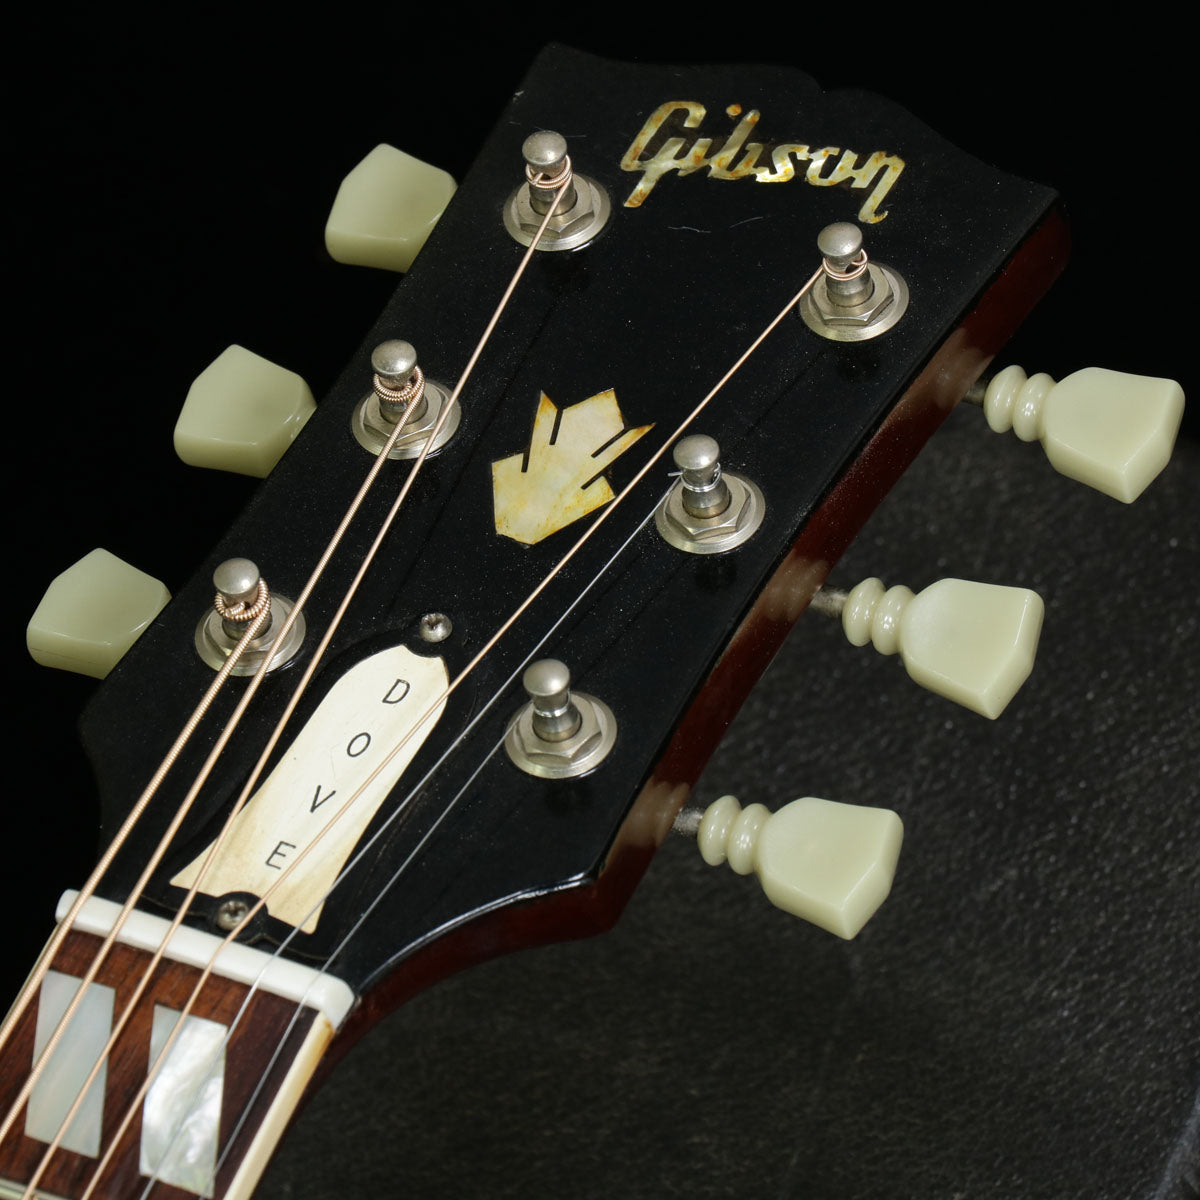 [SN 528593] USED Gibson / DOVE Cherry Sunburst [1968/Vintage] Gibson Acoustic Guitar [08]